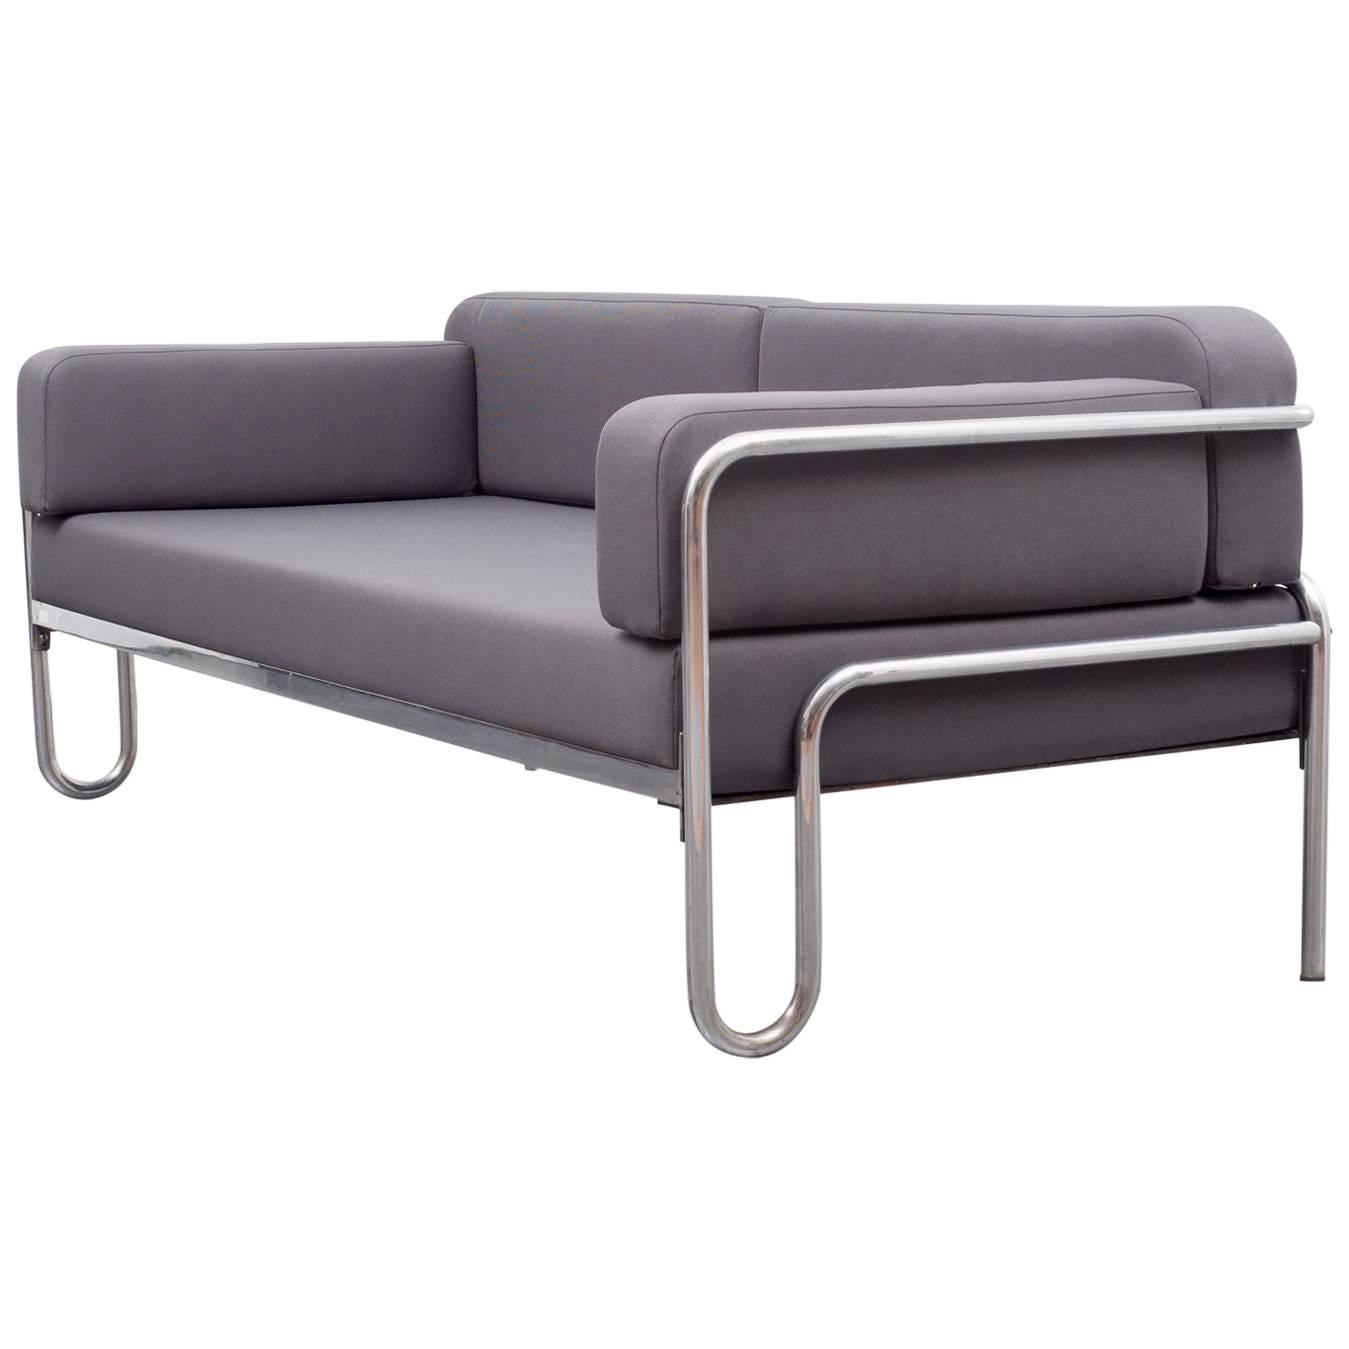 1930s Bauhaus Sofa, New Upholstery, Anthracite Fabric, Tubulair Steel Frame